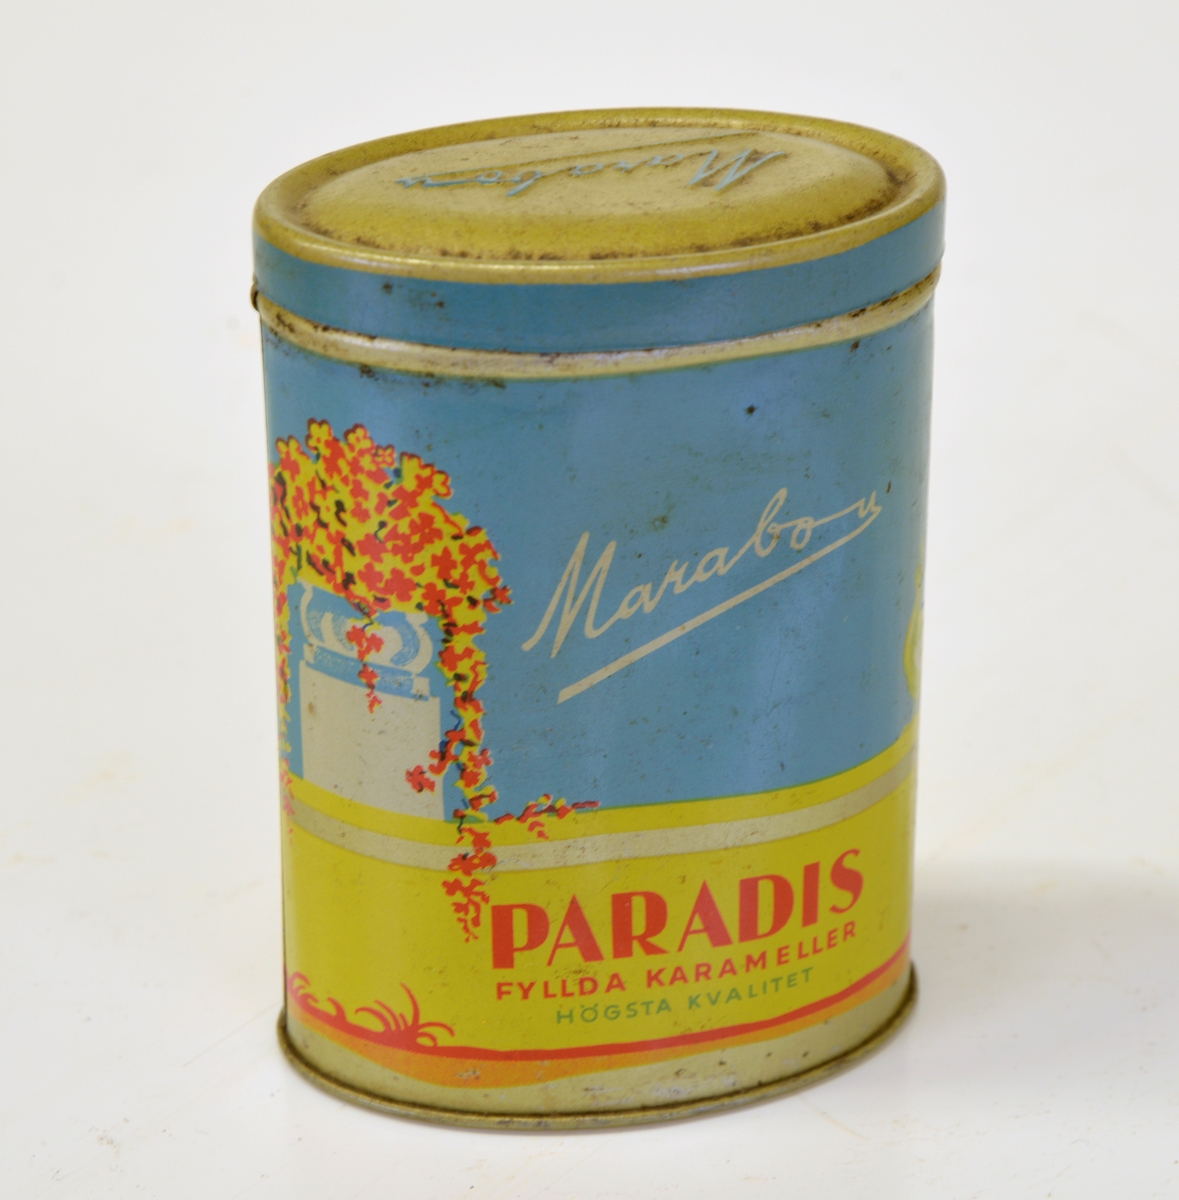 Marabou "Paradis fyllda karameller".
Flerfärgad. Påfågelmotiv.
Oval form.
